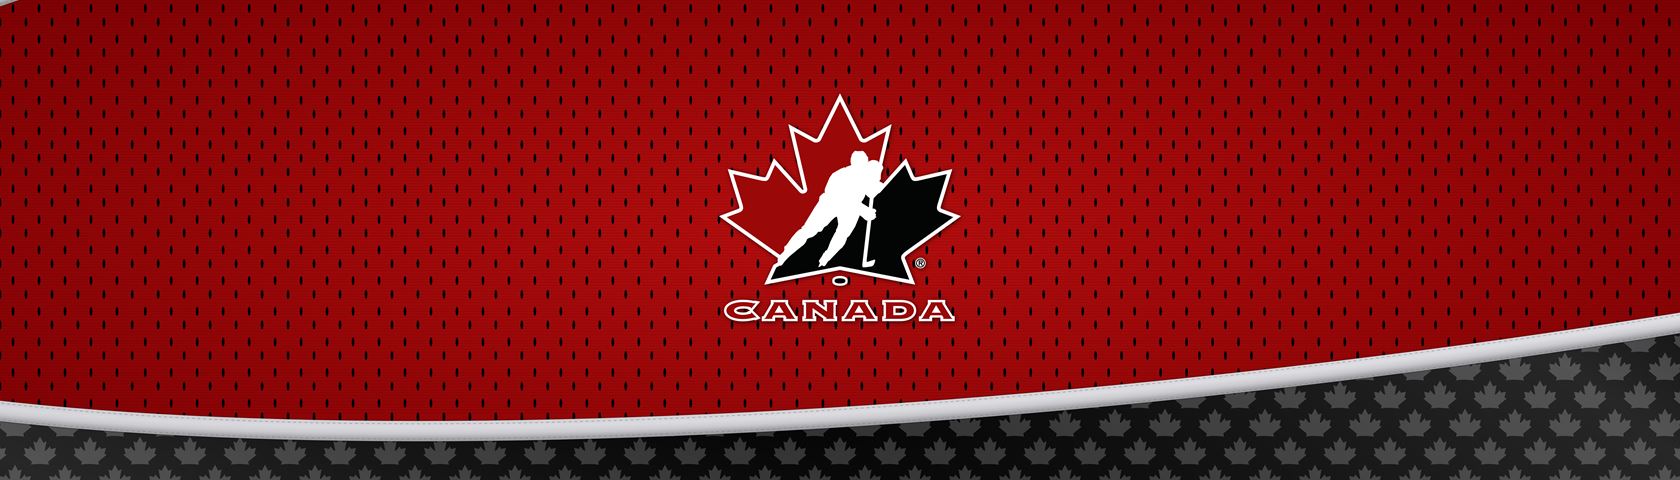 Go Canada! (Triple Screen, Curved)